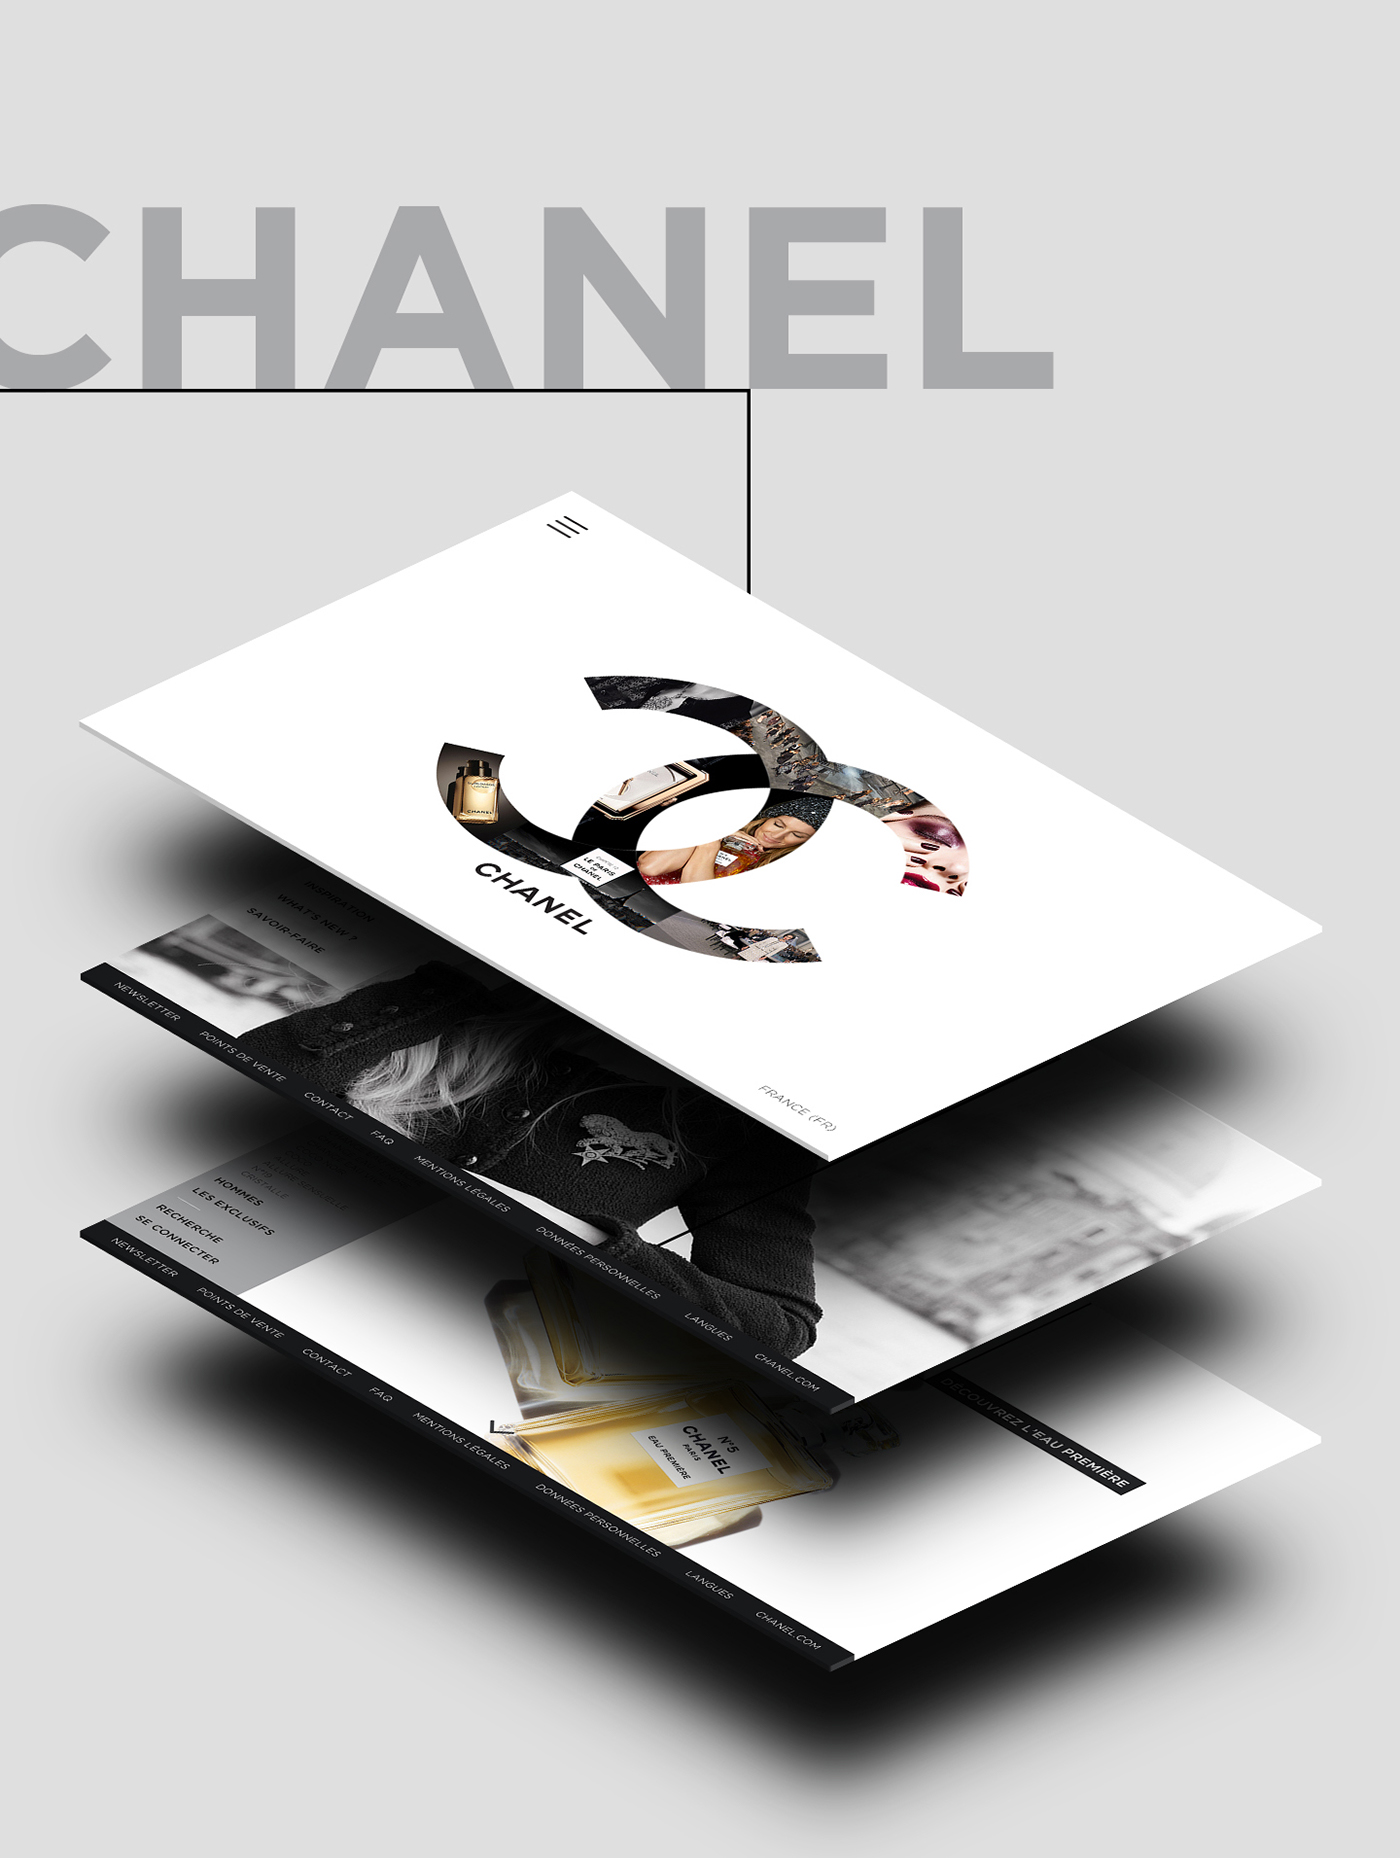 chanel website